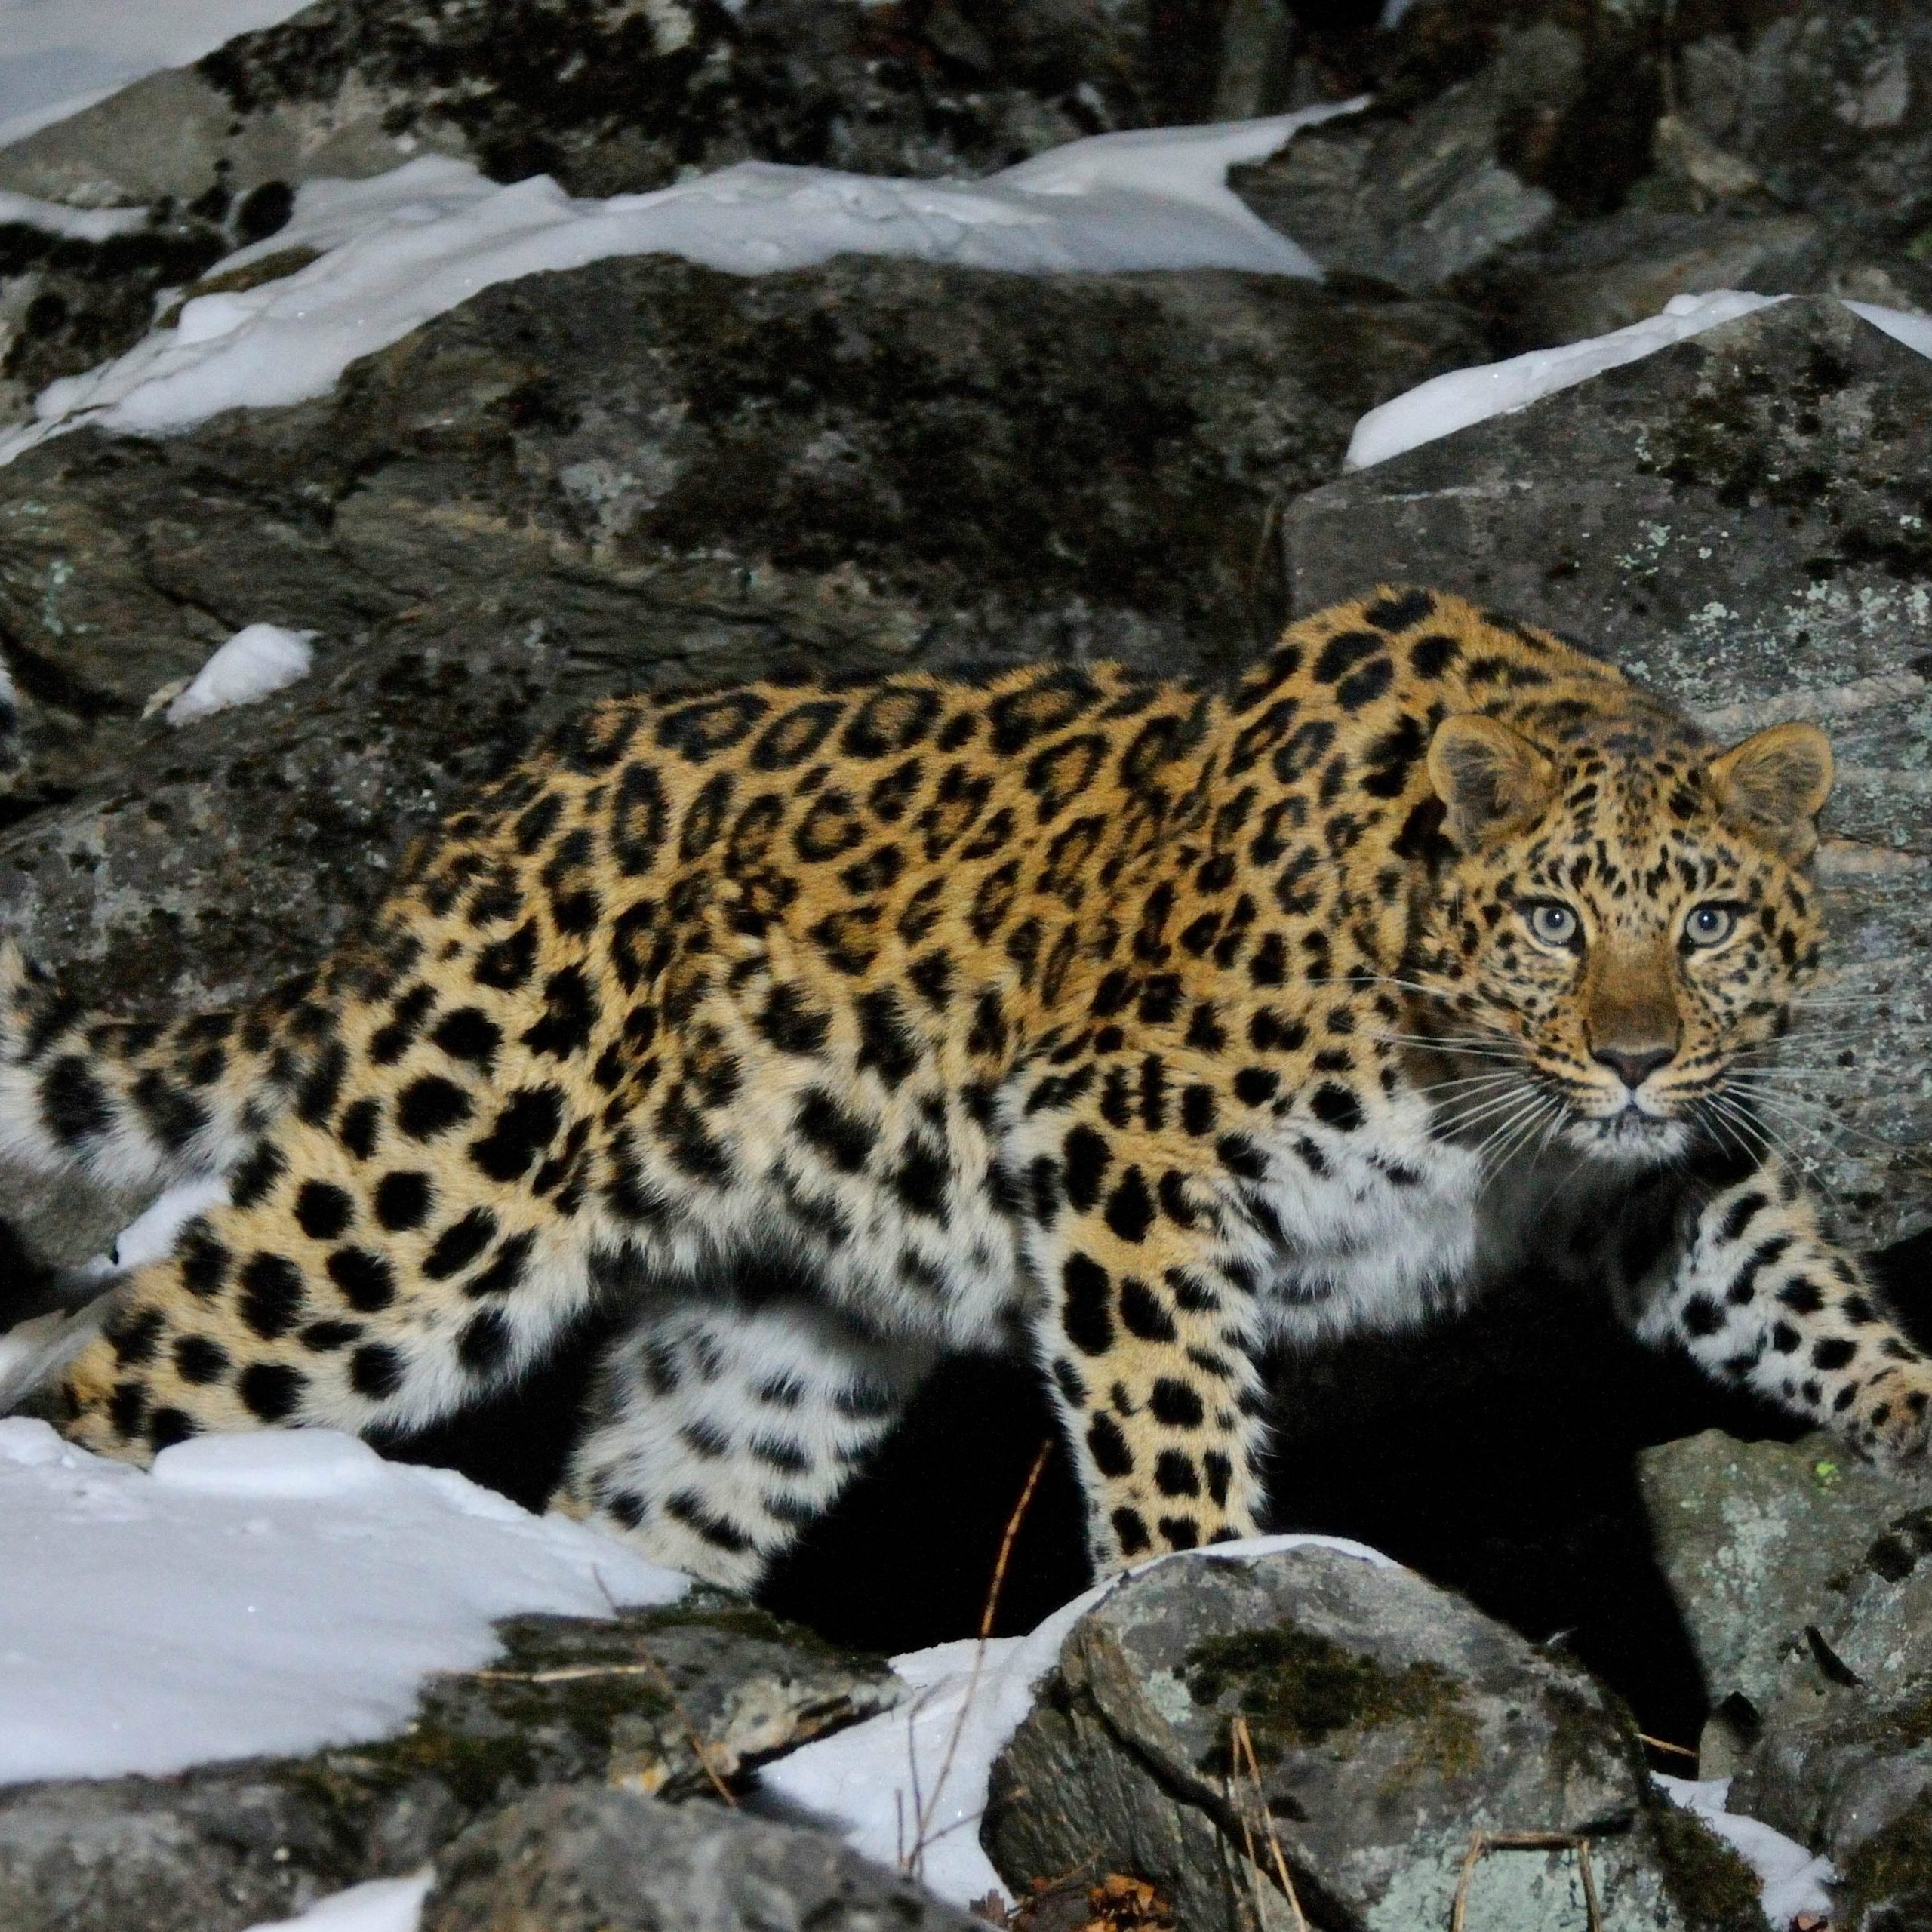 An Amur leopard glances at the camera as it traverses the snowy, rocky terrain of Amur-Heilong